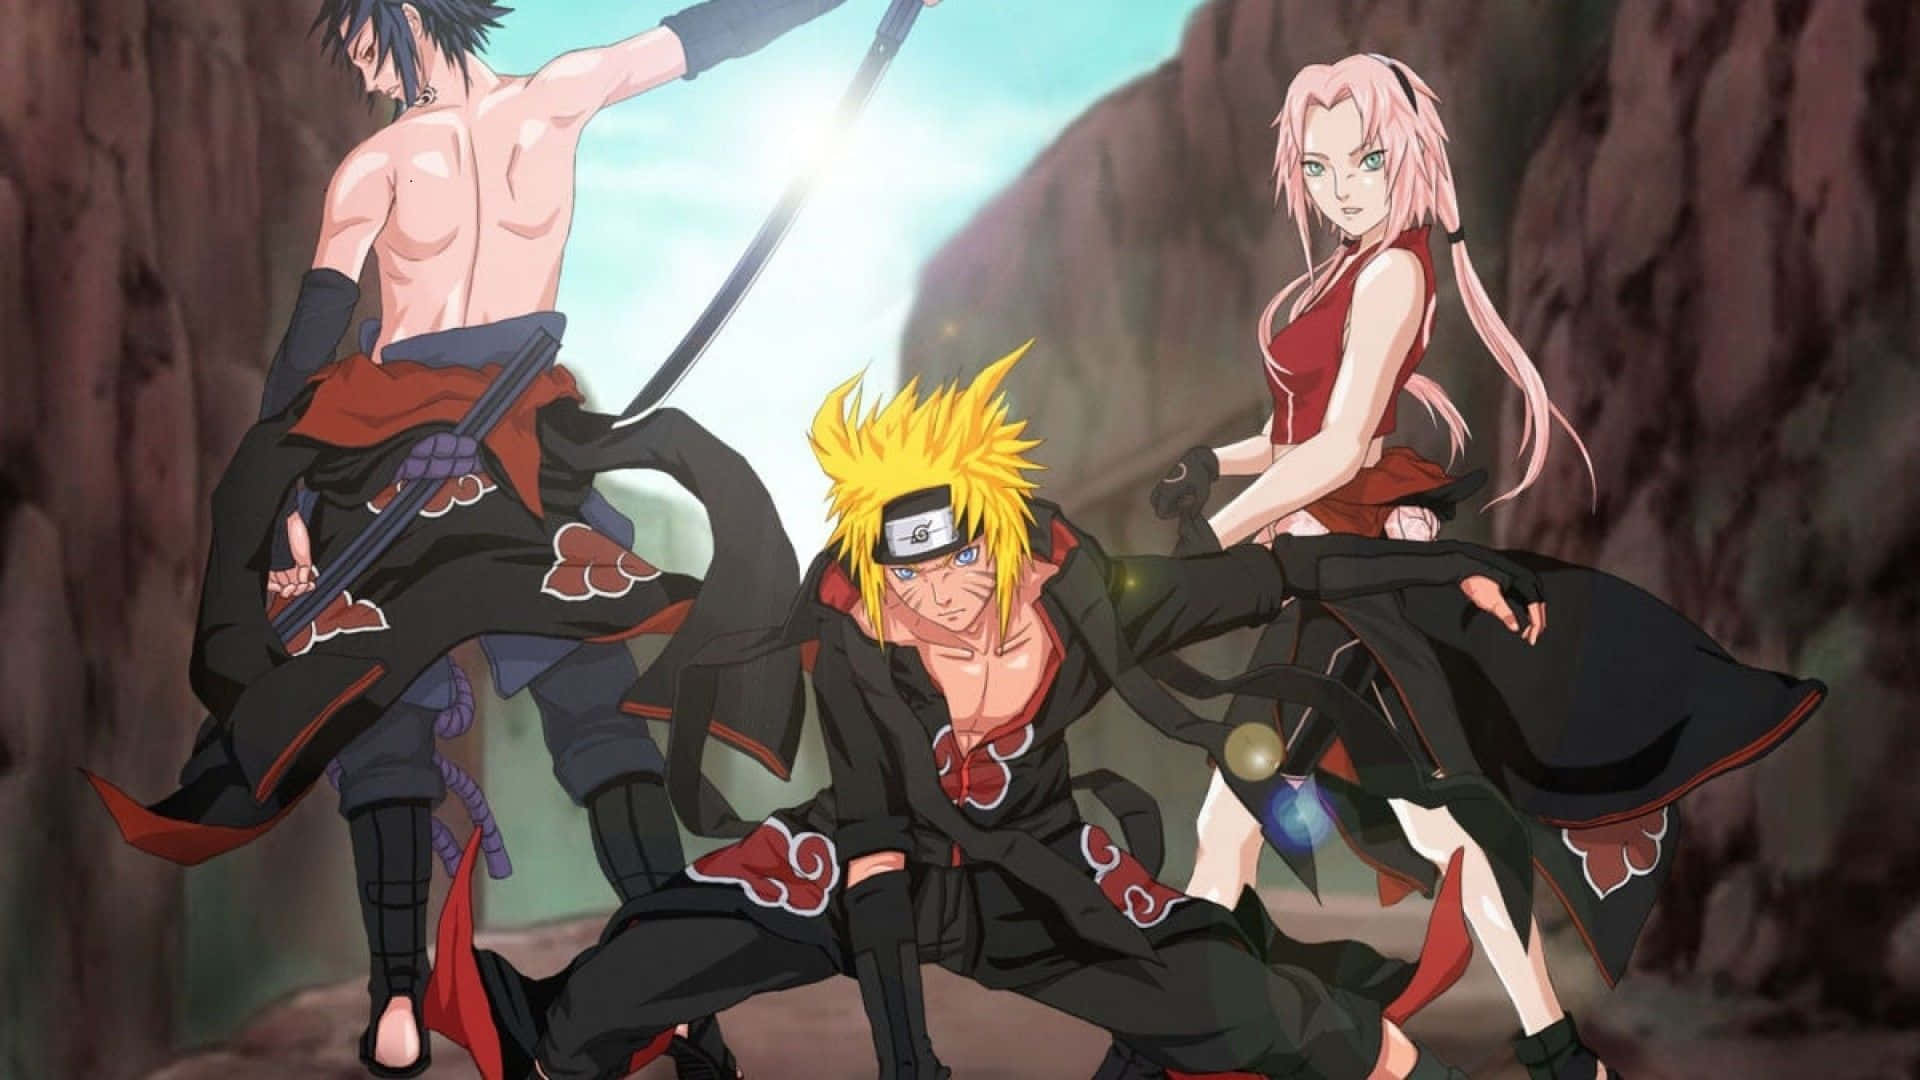 Naruto Team 7 In Battle Pose Wallpaper